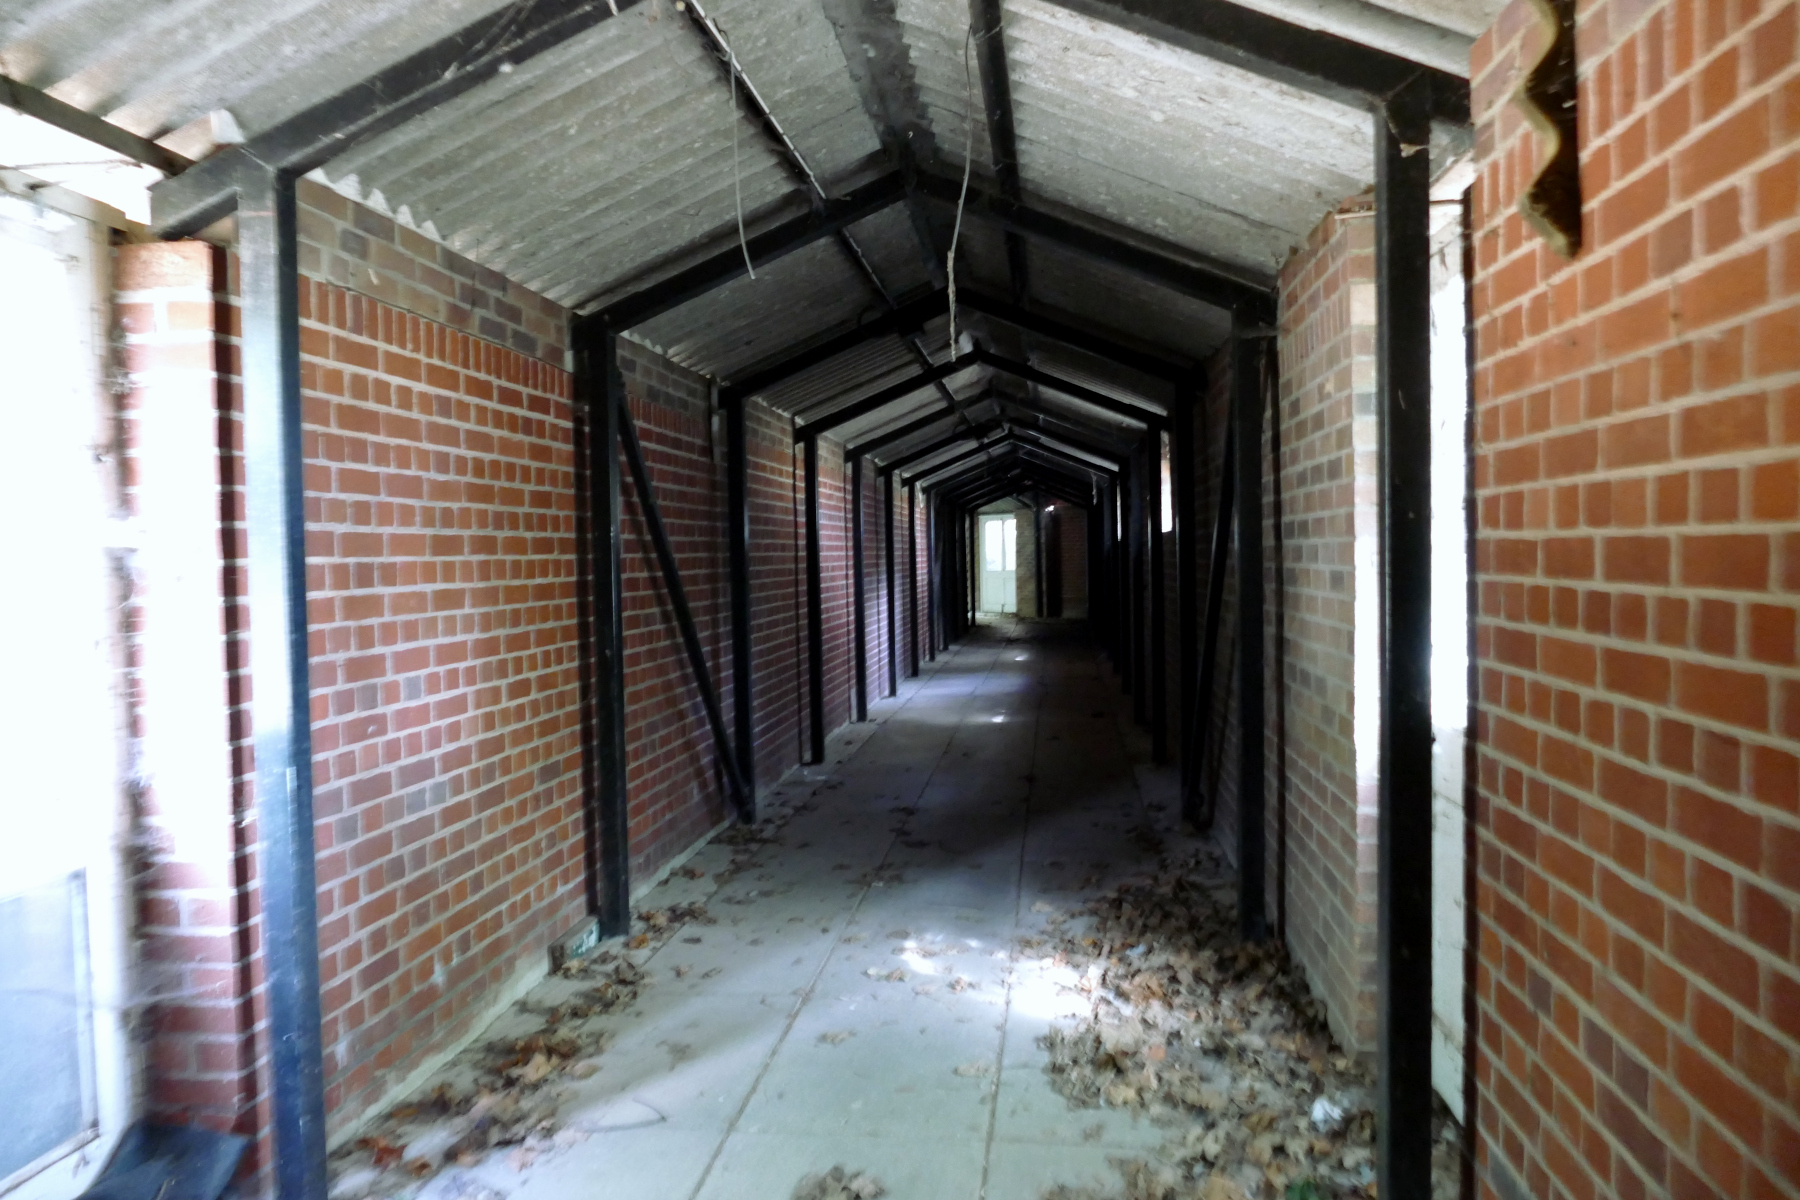 Interior of creepy brick corridor in Sergeants' Mess